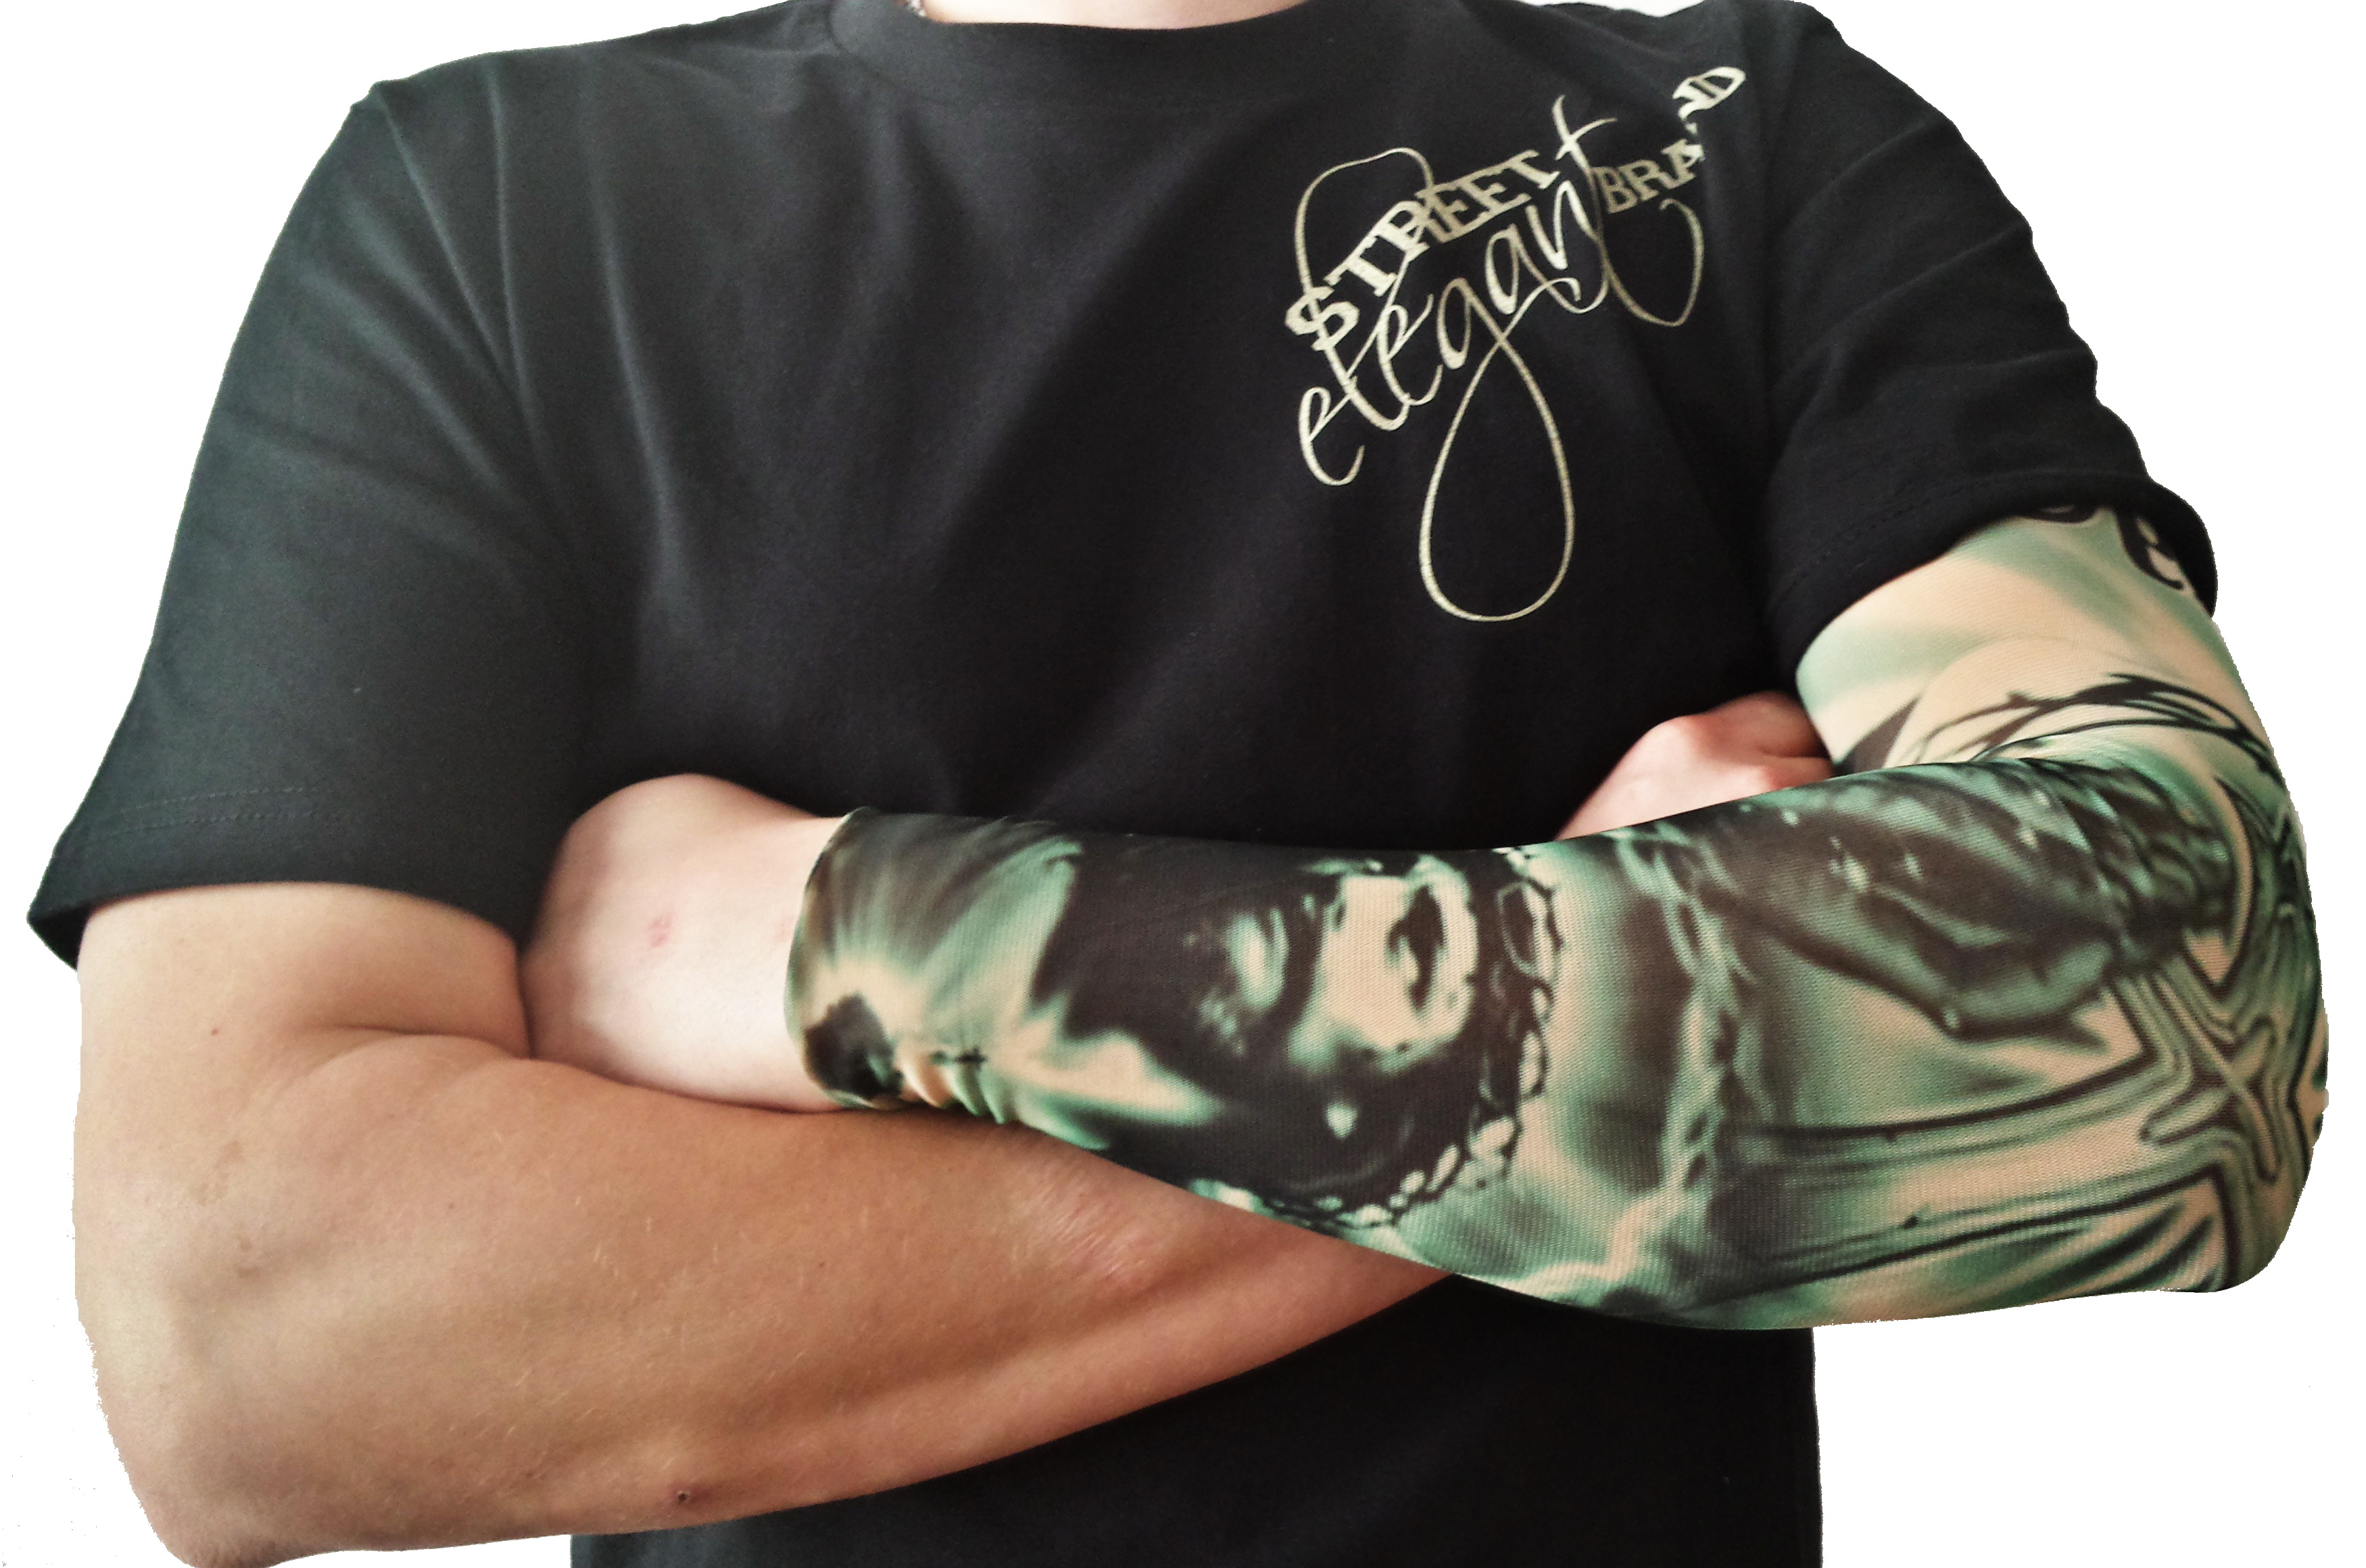 arm tattoos for men half sleeves jesus